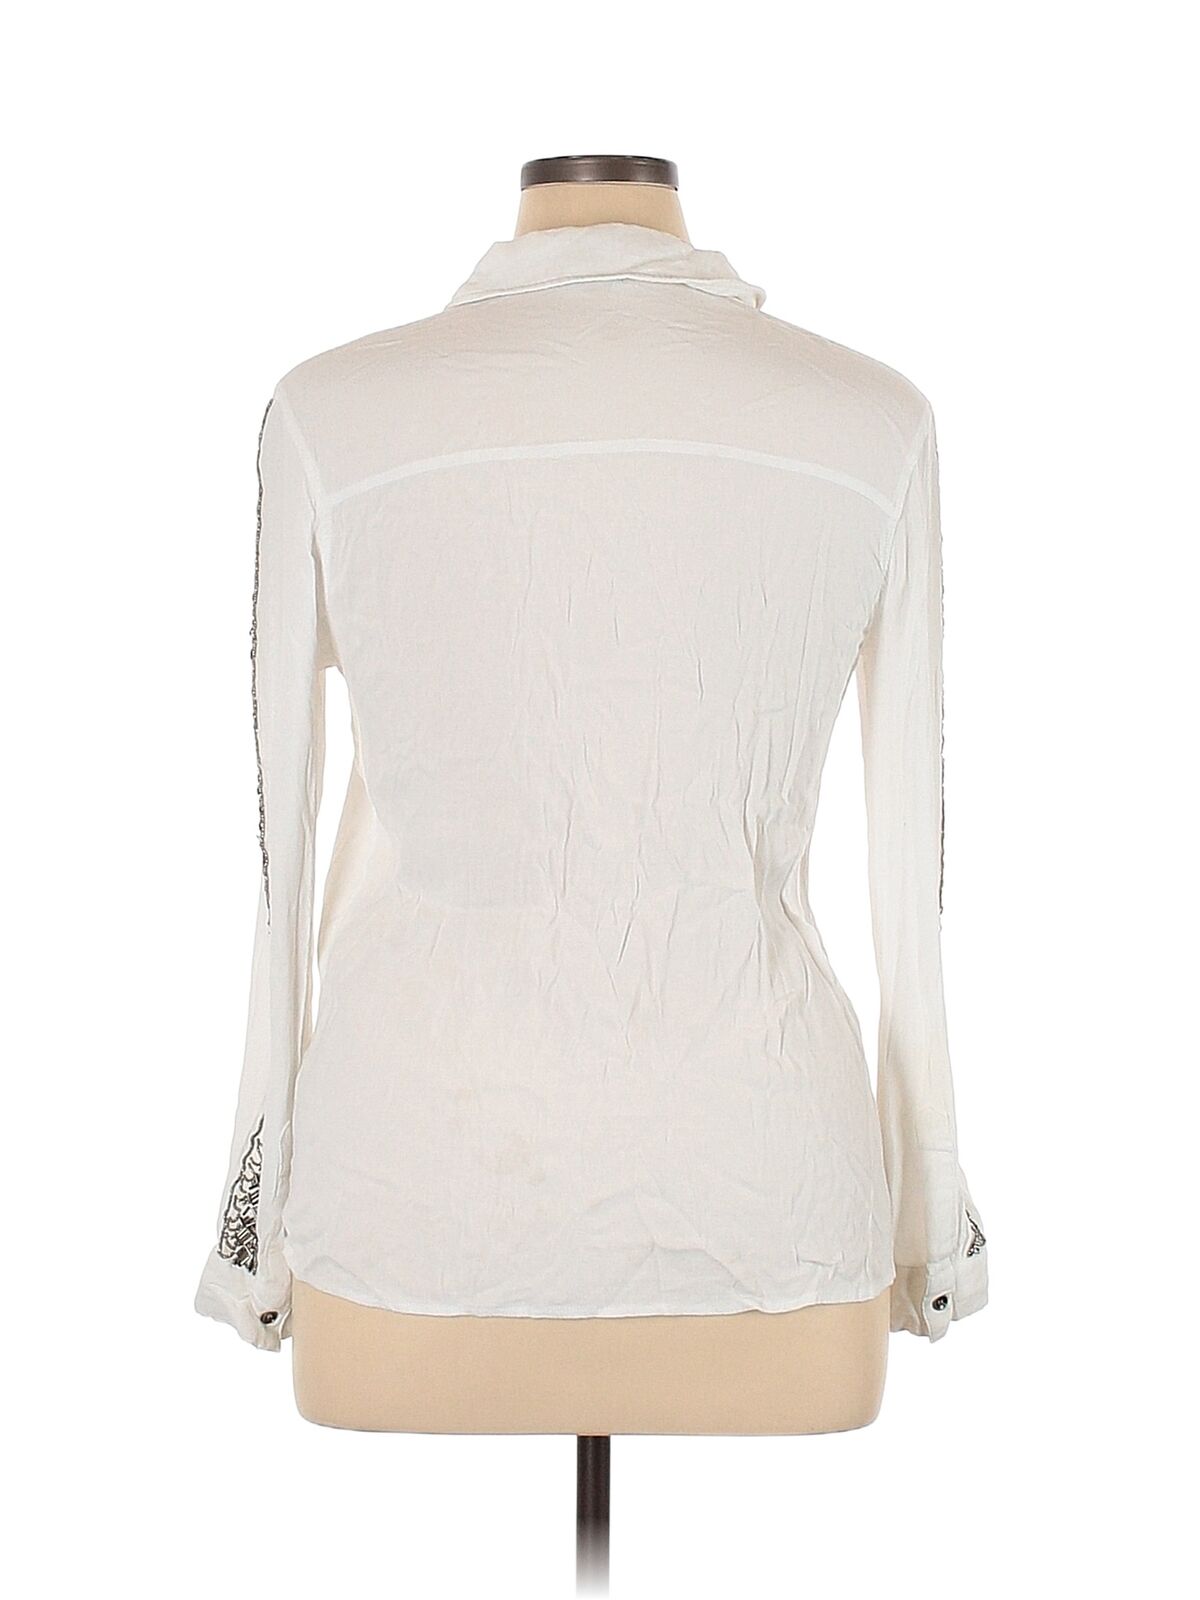 Miss Me Women Ivory Long Sleeve Blouse XL - image 2